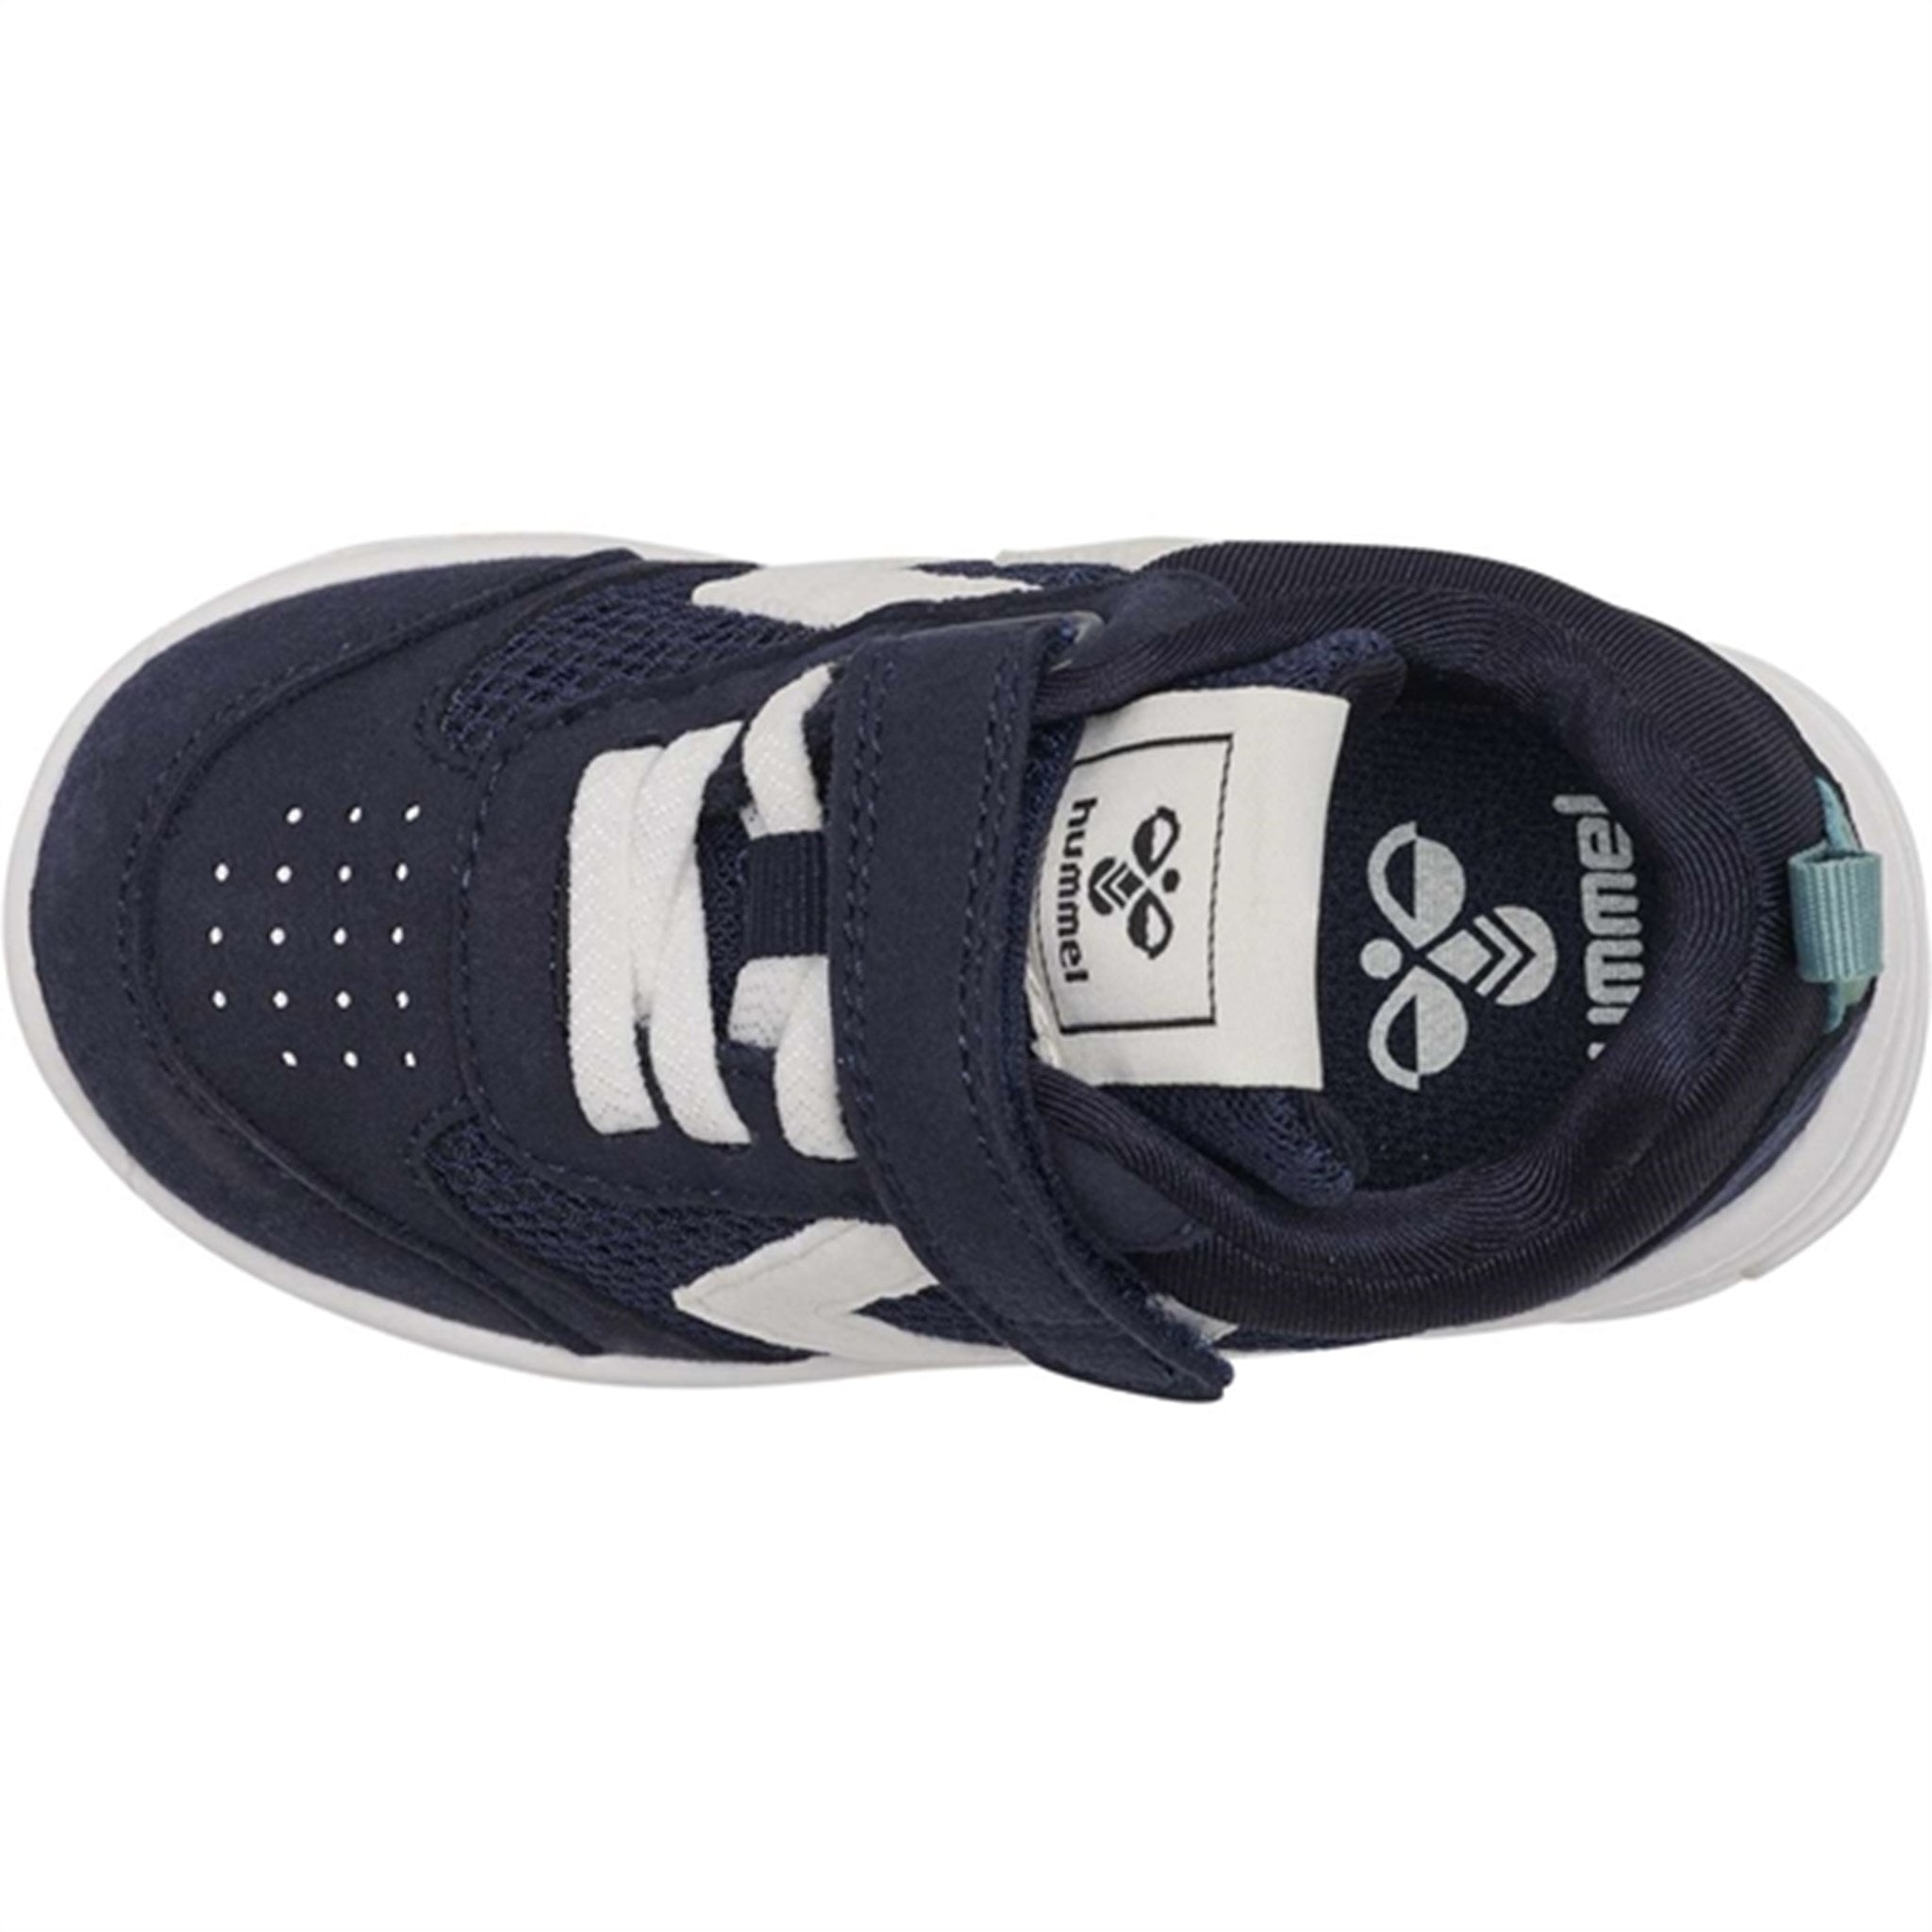 Hummel Crosslite Winter Infant Black Iris Sneakers 5